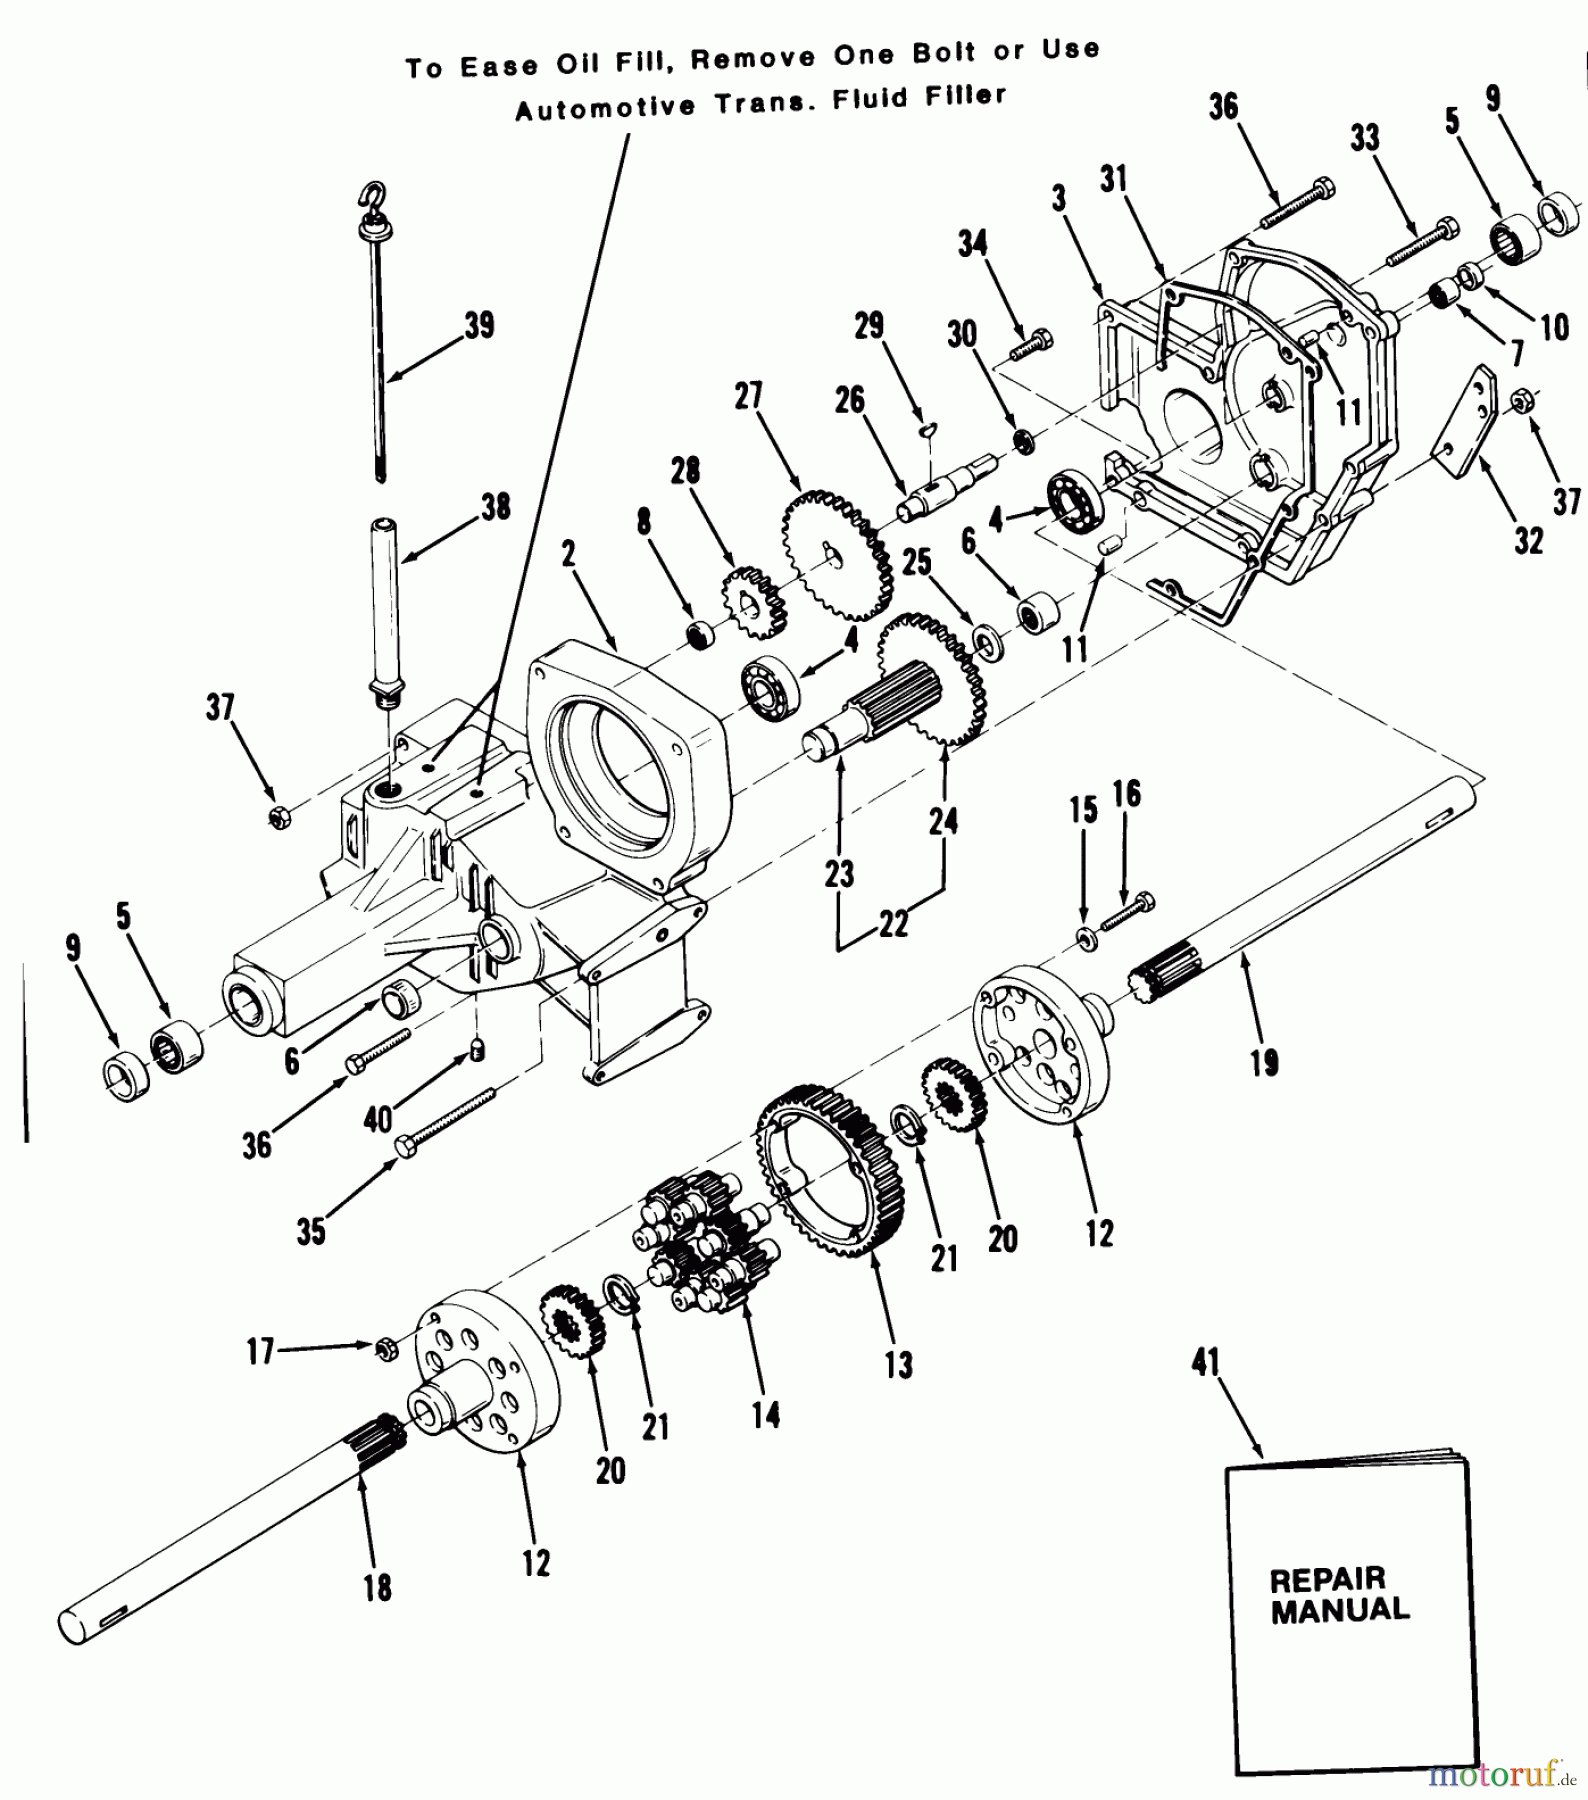  Toro Neu Mowers, Lawn & Garden Tractor Seite 1 11-17KE01 (C-175) - Toro C-175 Twin Automatic Tractor, 1984 TRANSAXLE